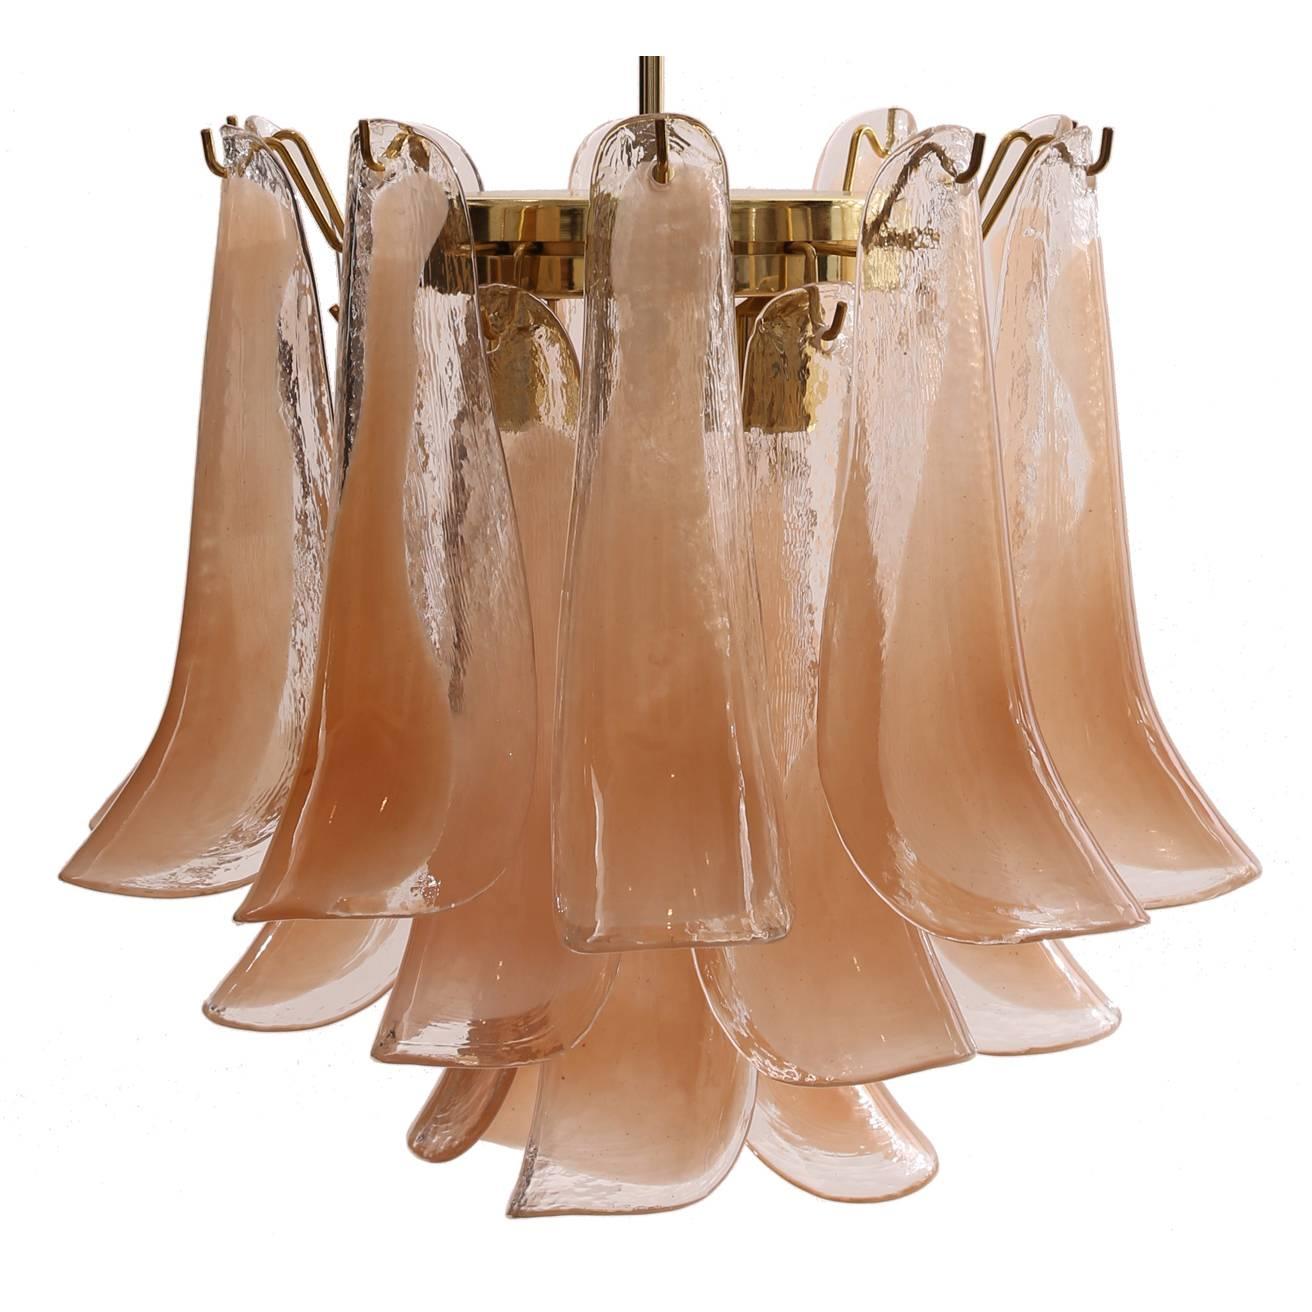 Three-Tiered Murano Glass Chandelier by Mazzega